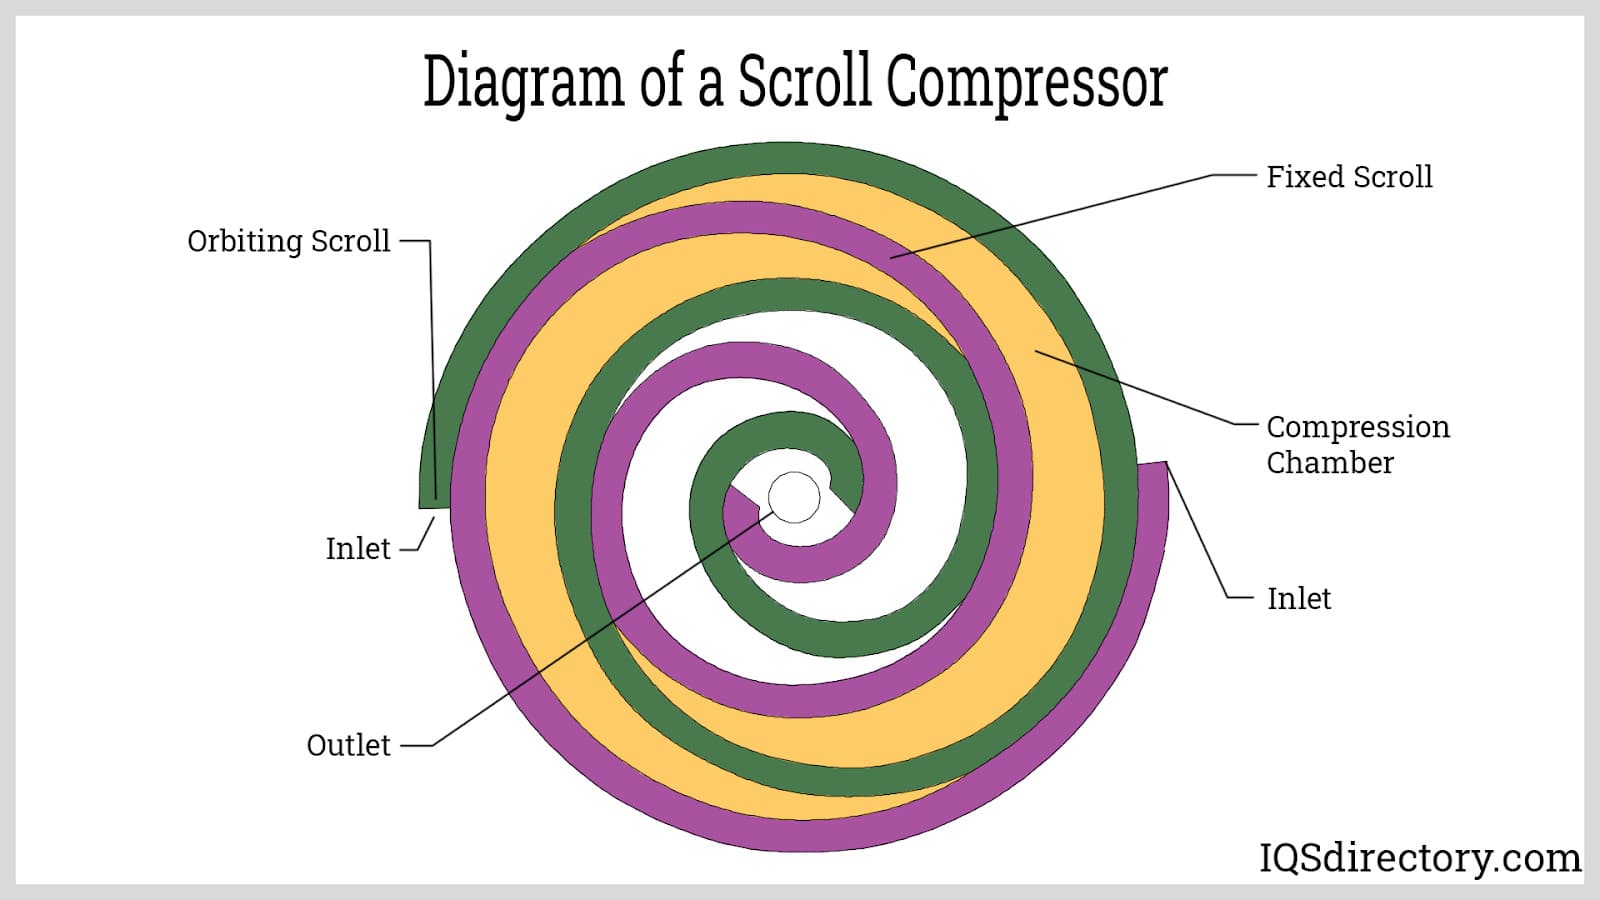 Diagram of a Scroll Compressor